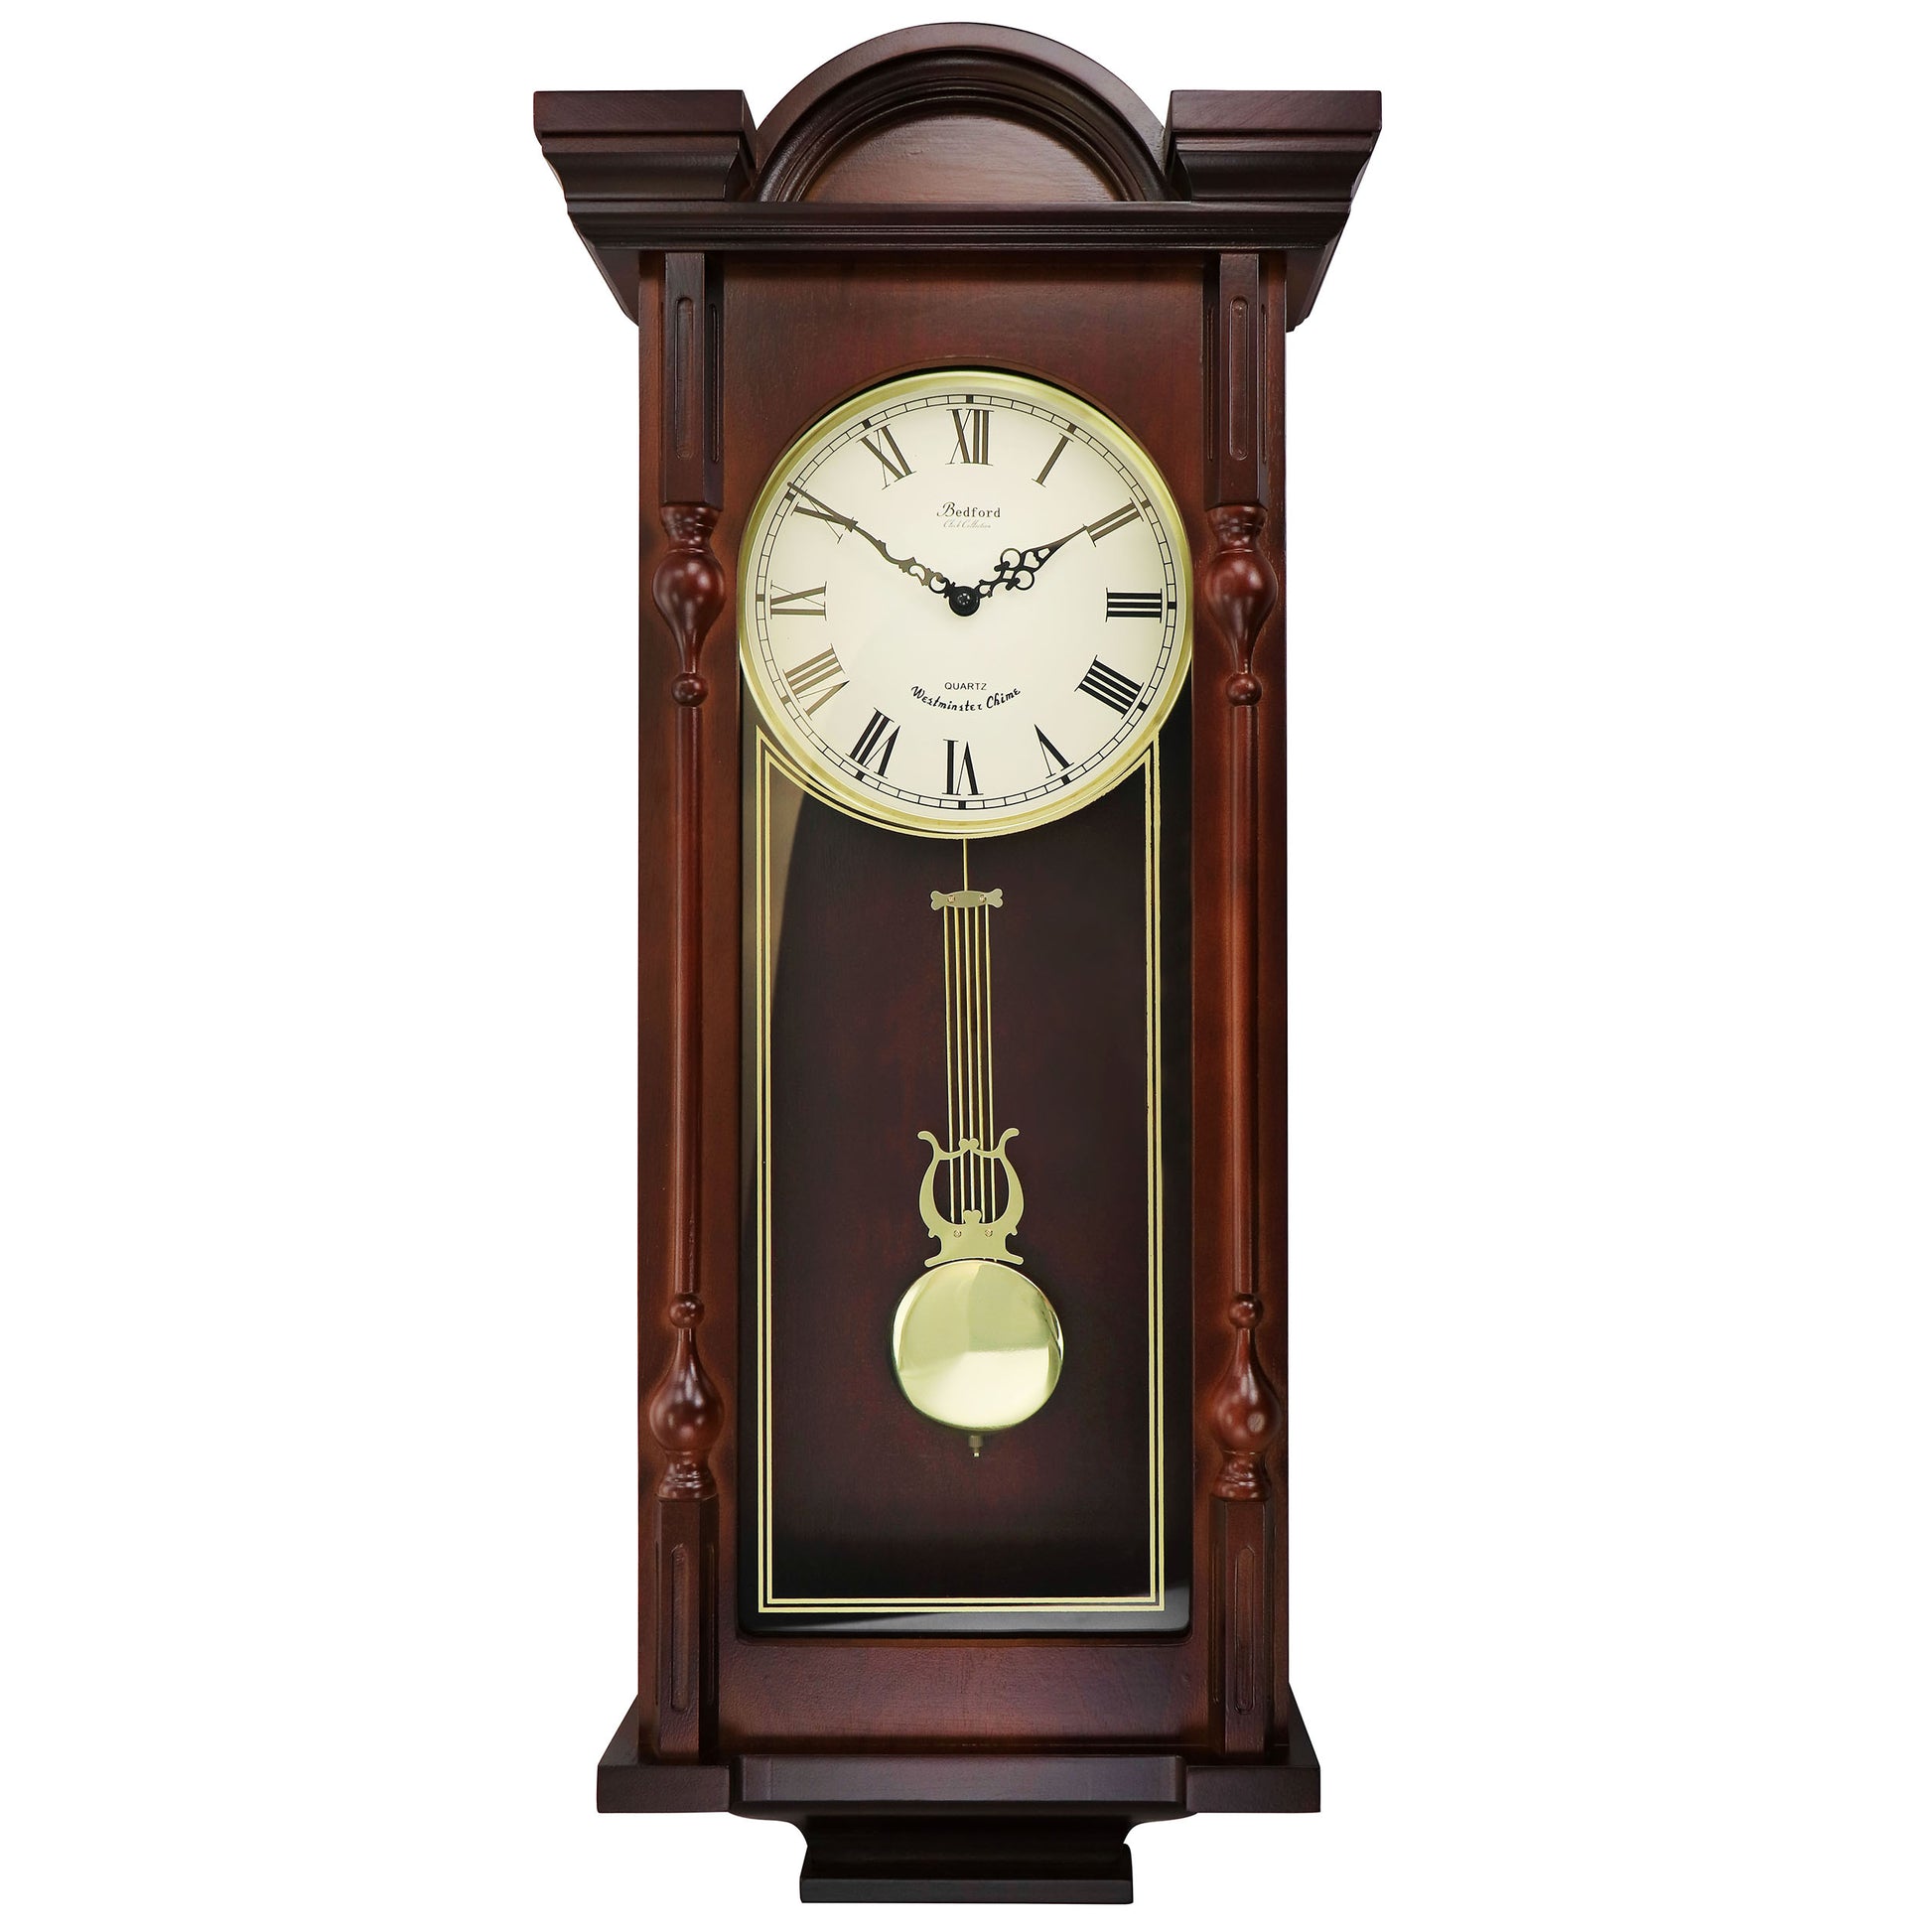 Bedford Clock Collection Bedford Clock Collection Grand 31 Inch Chiming Pendulum Wall Clock in Antique Mahogany Cherry Finish